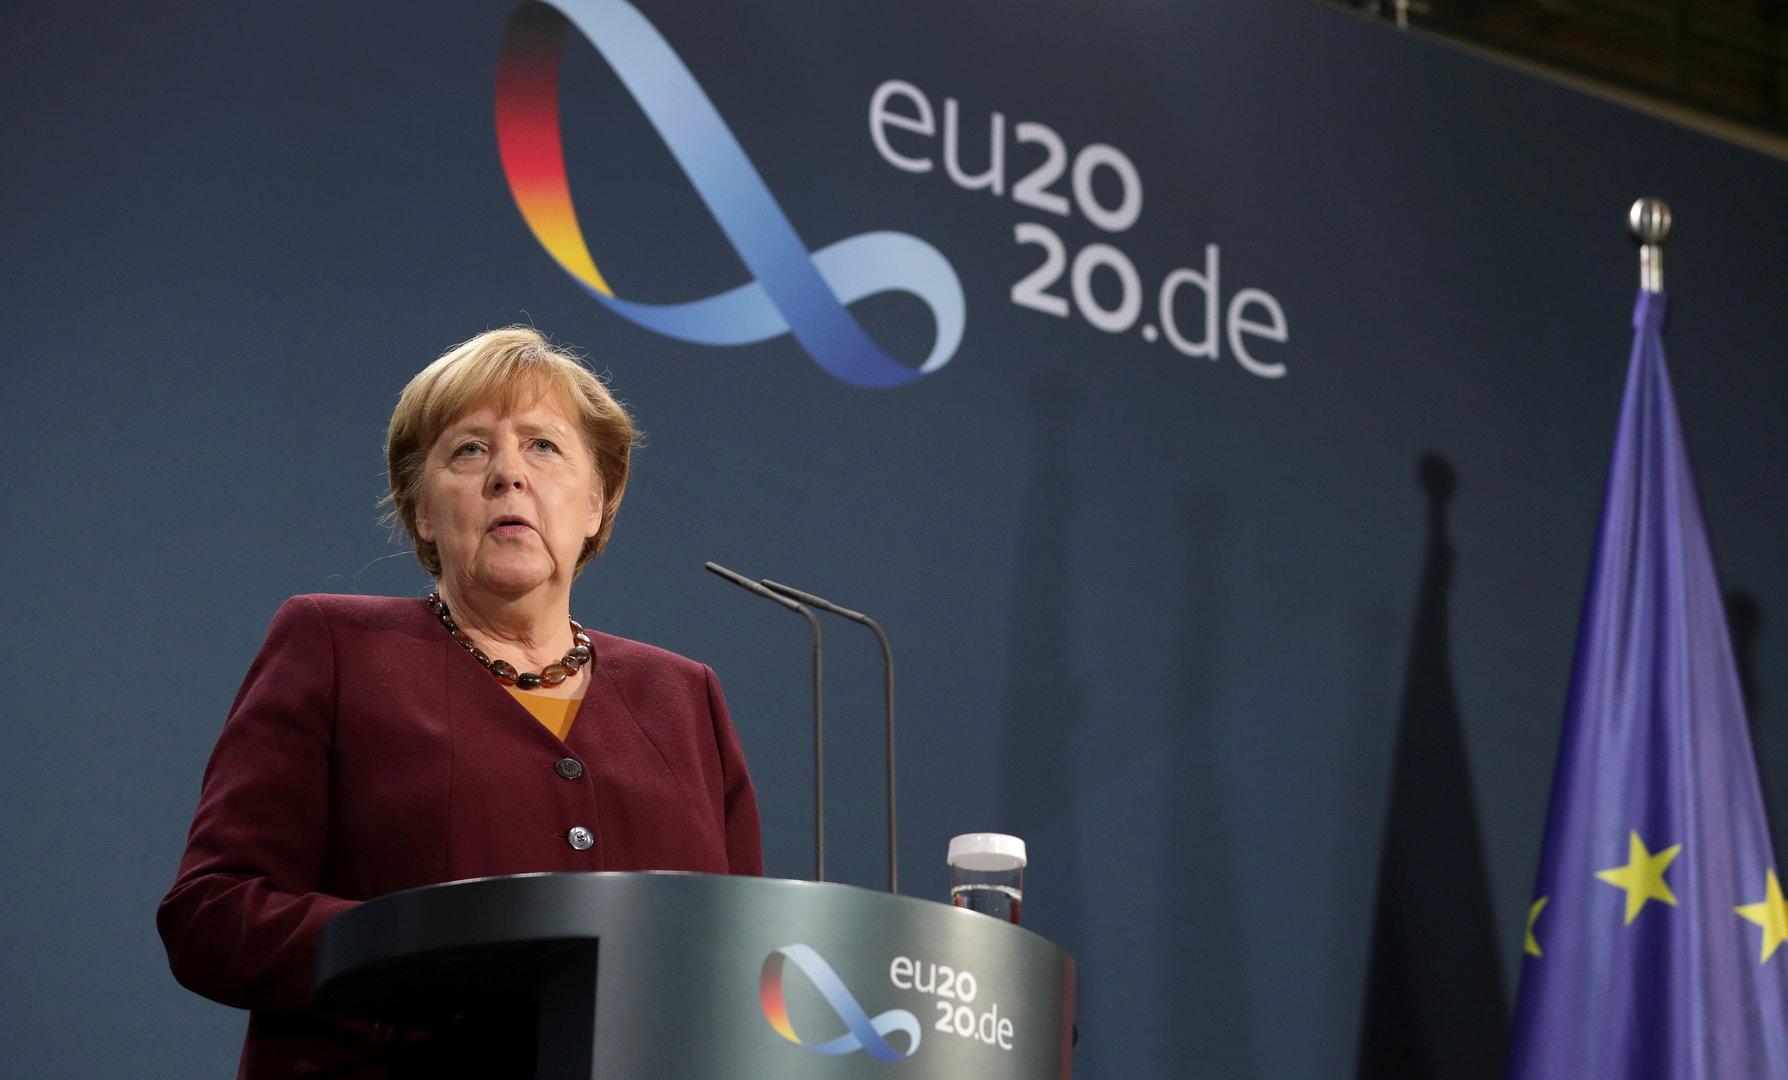 Ein armes Europa ohne die Konstante Merkel